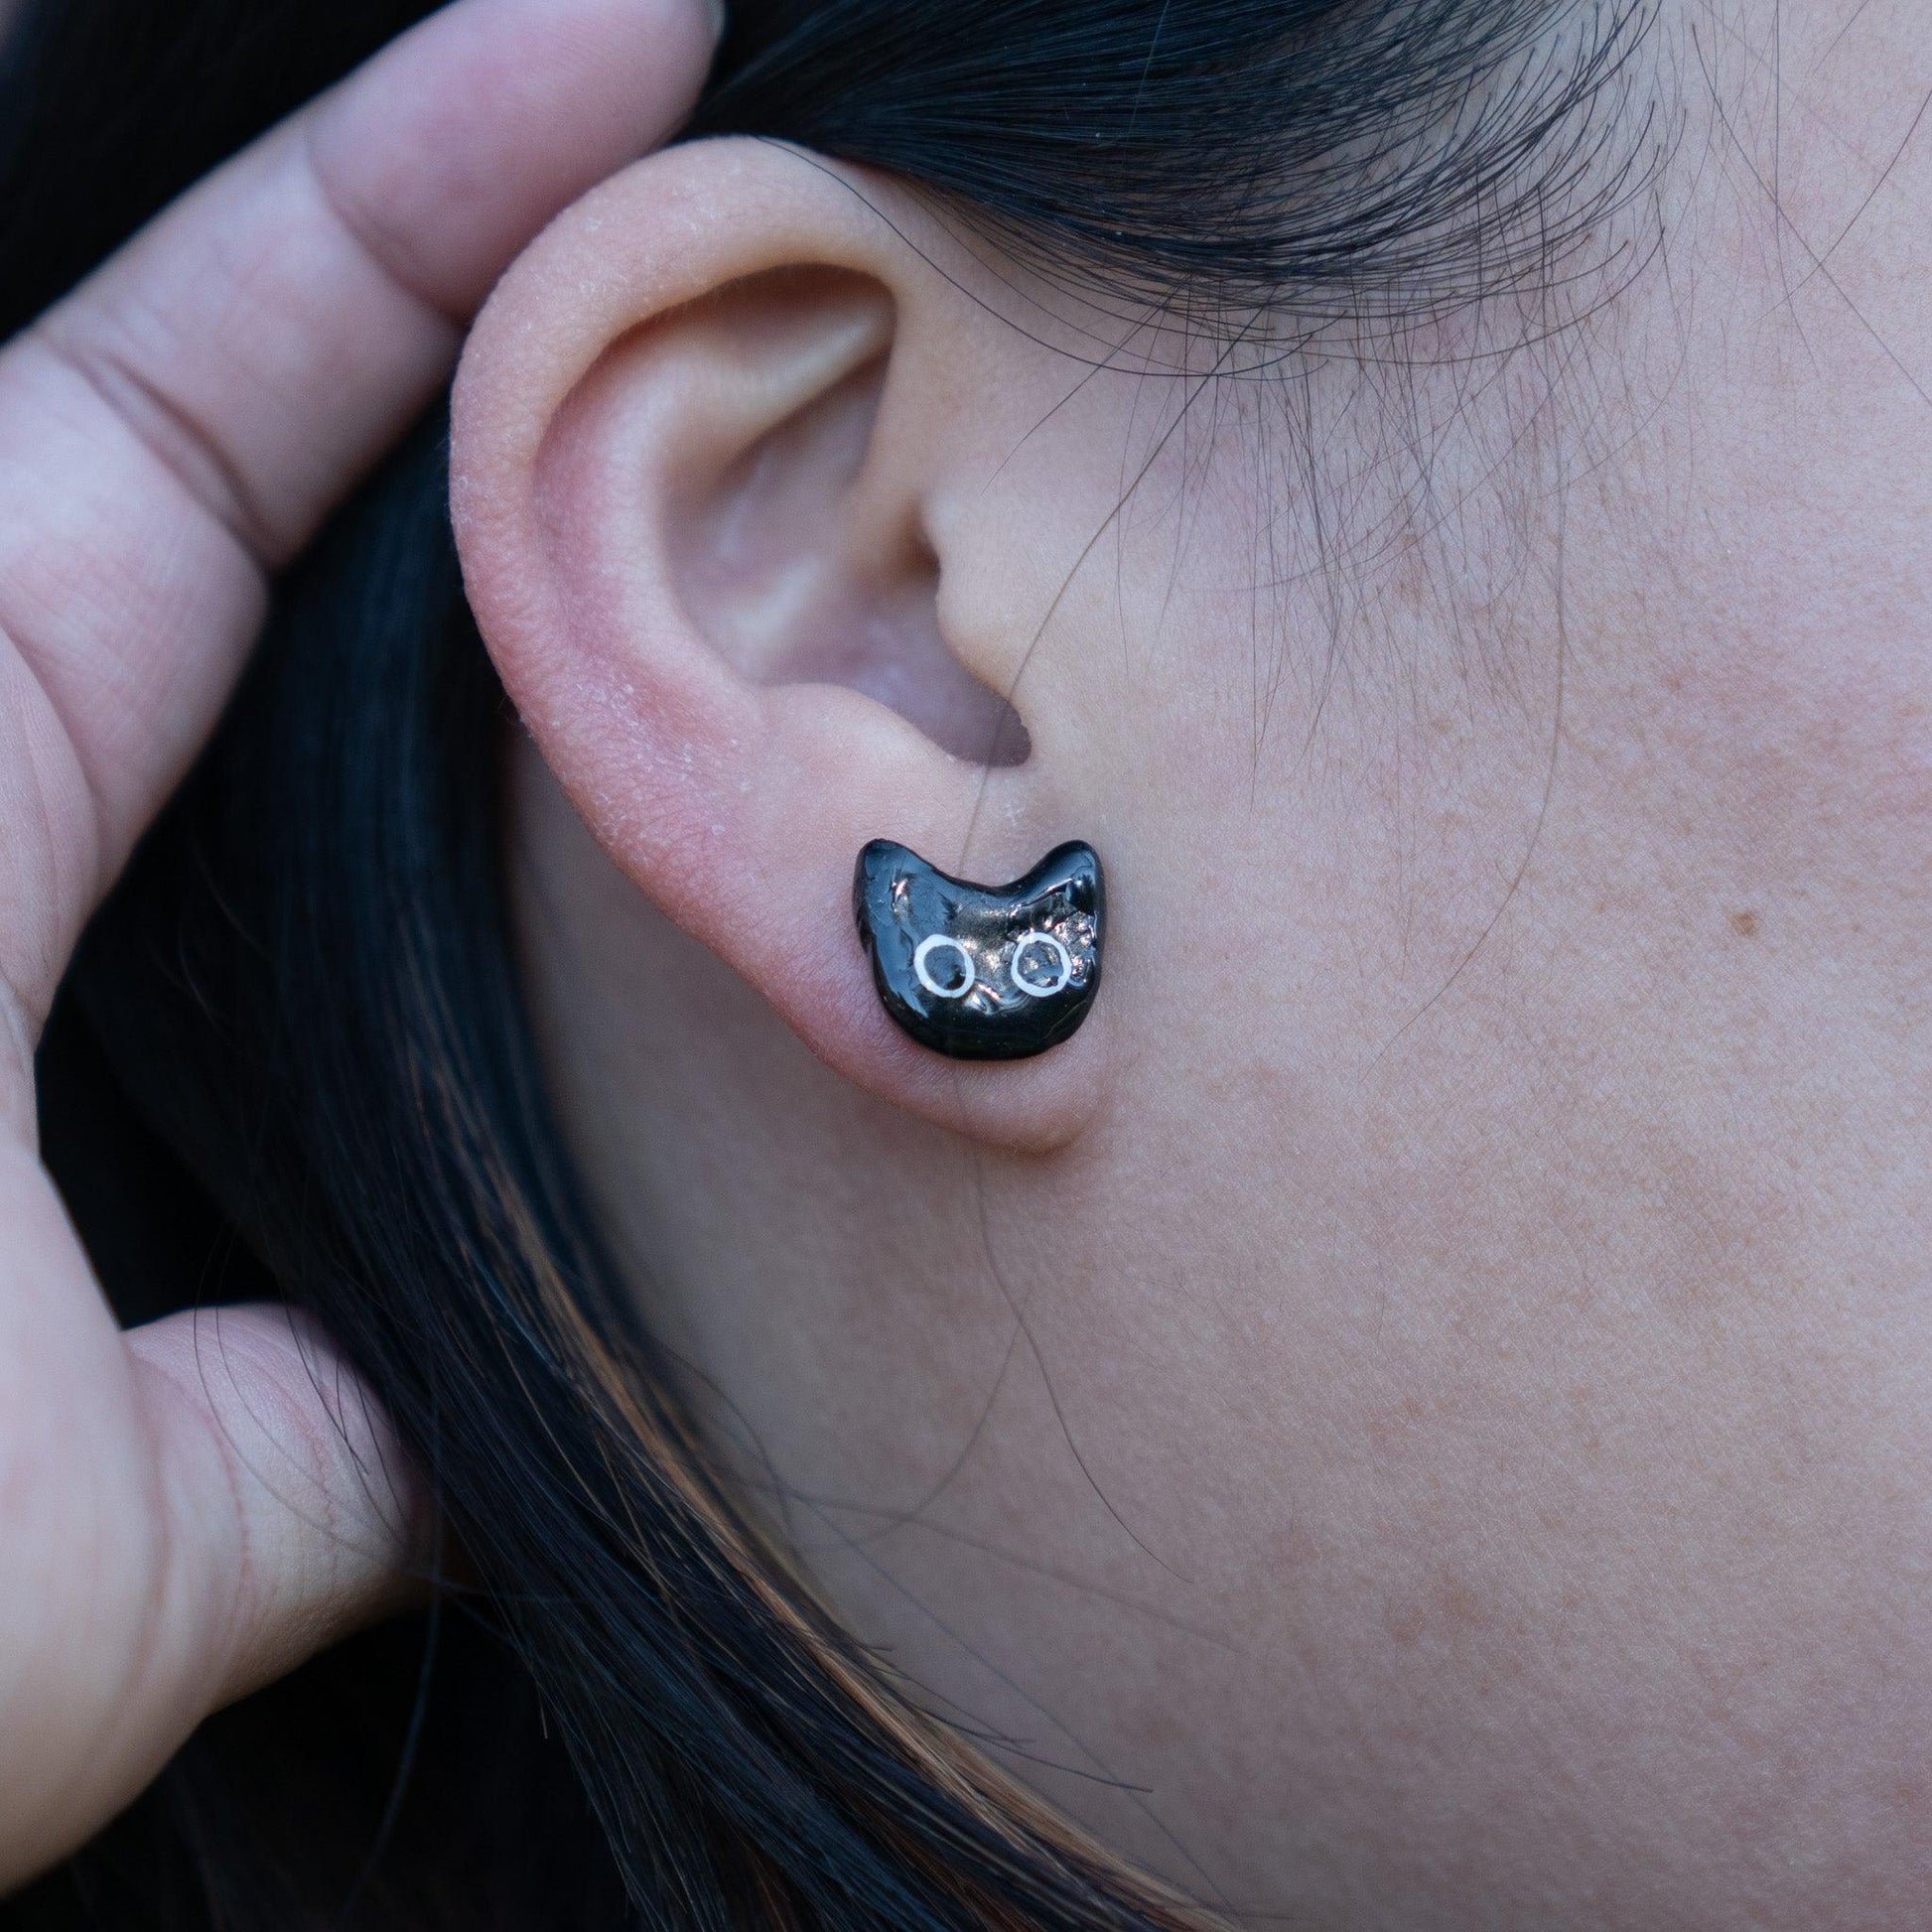 black cat polymer earrings with big eyes, uv resin coated.